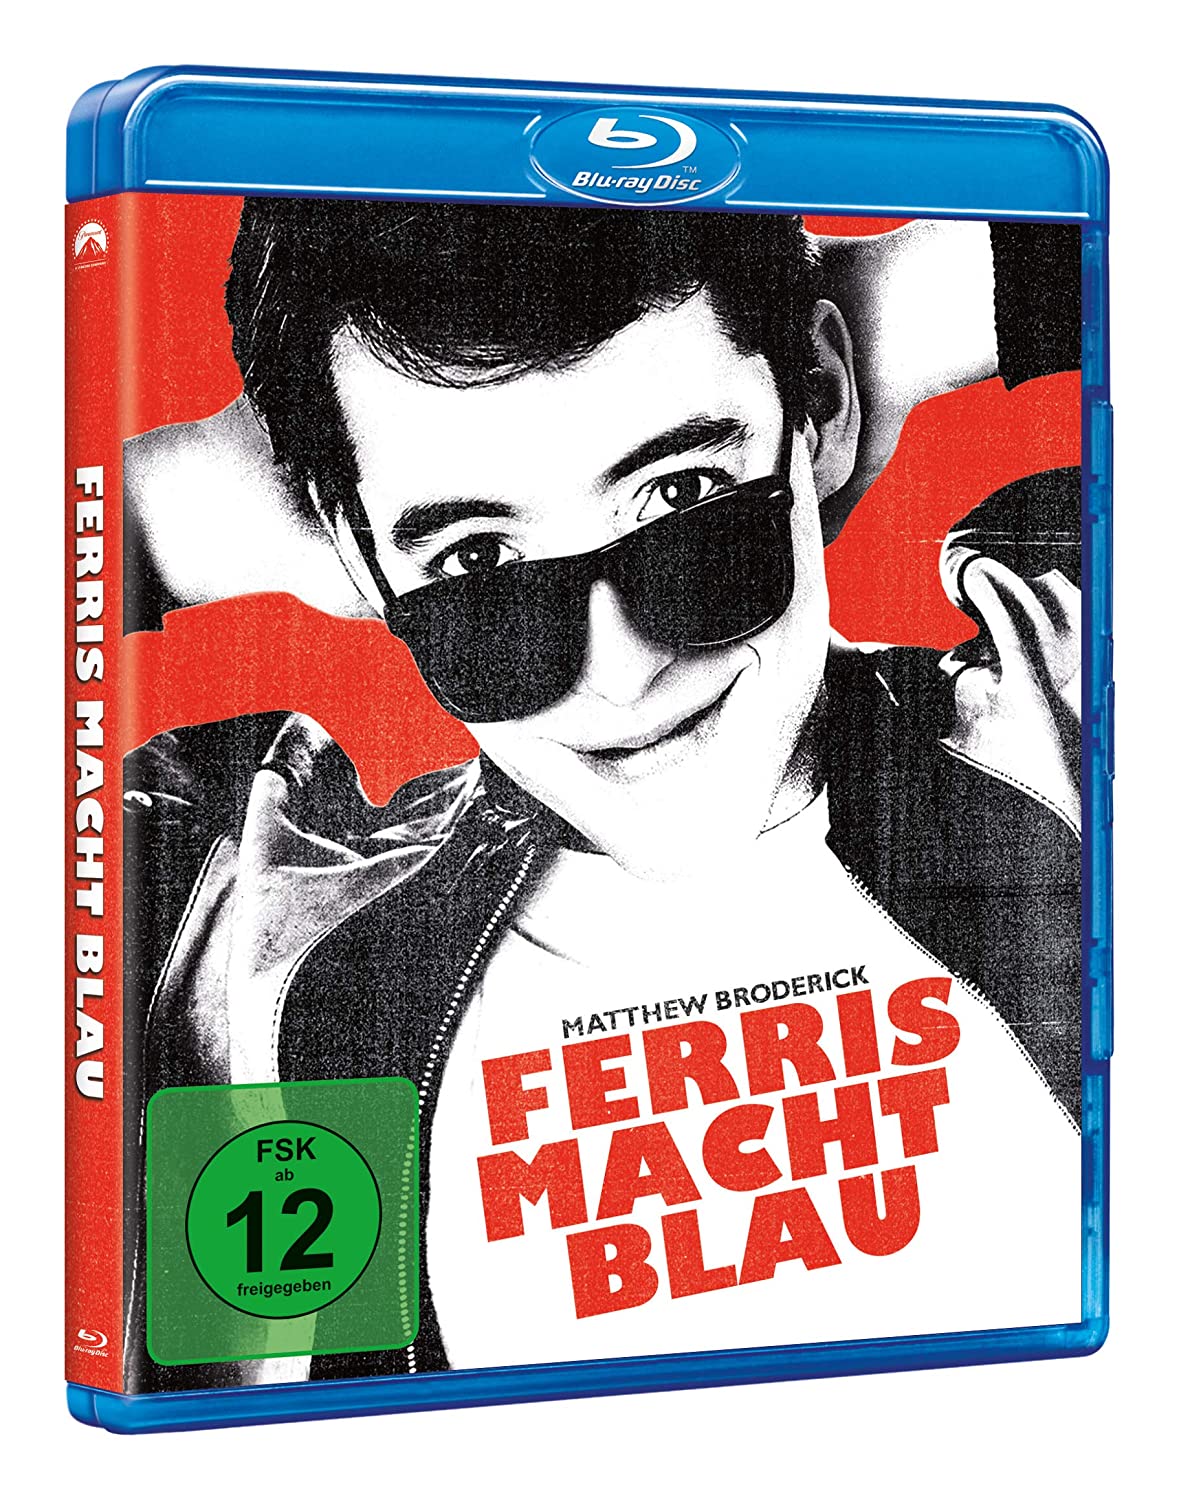 NEU: Komödie „Ferris macht blau!“